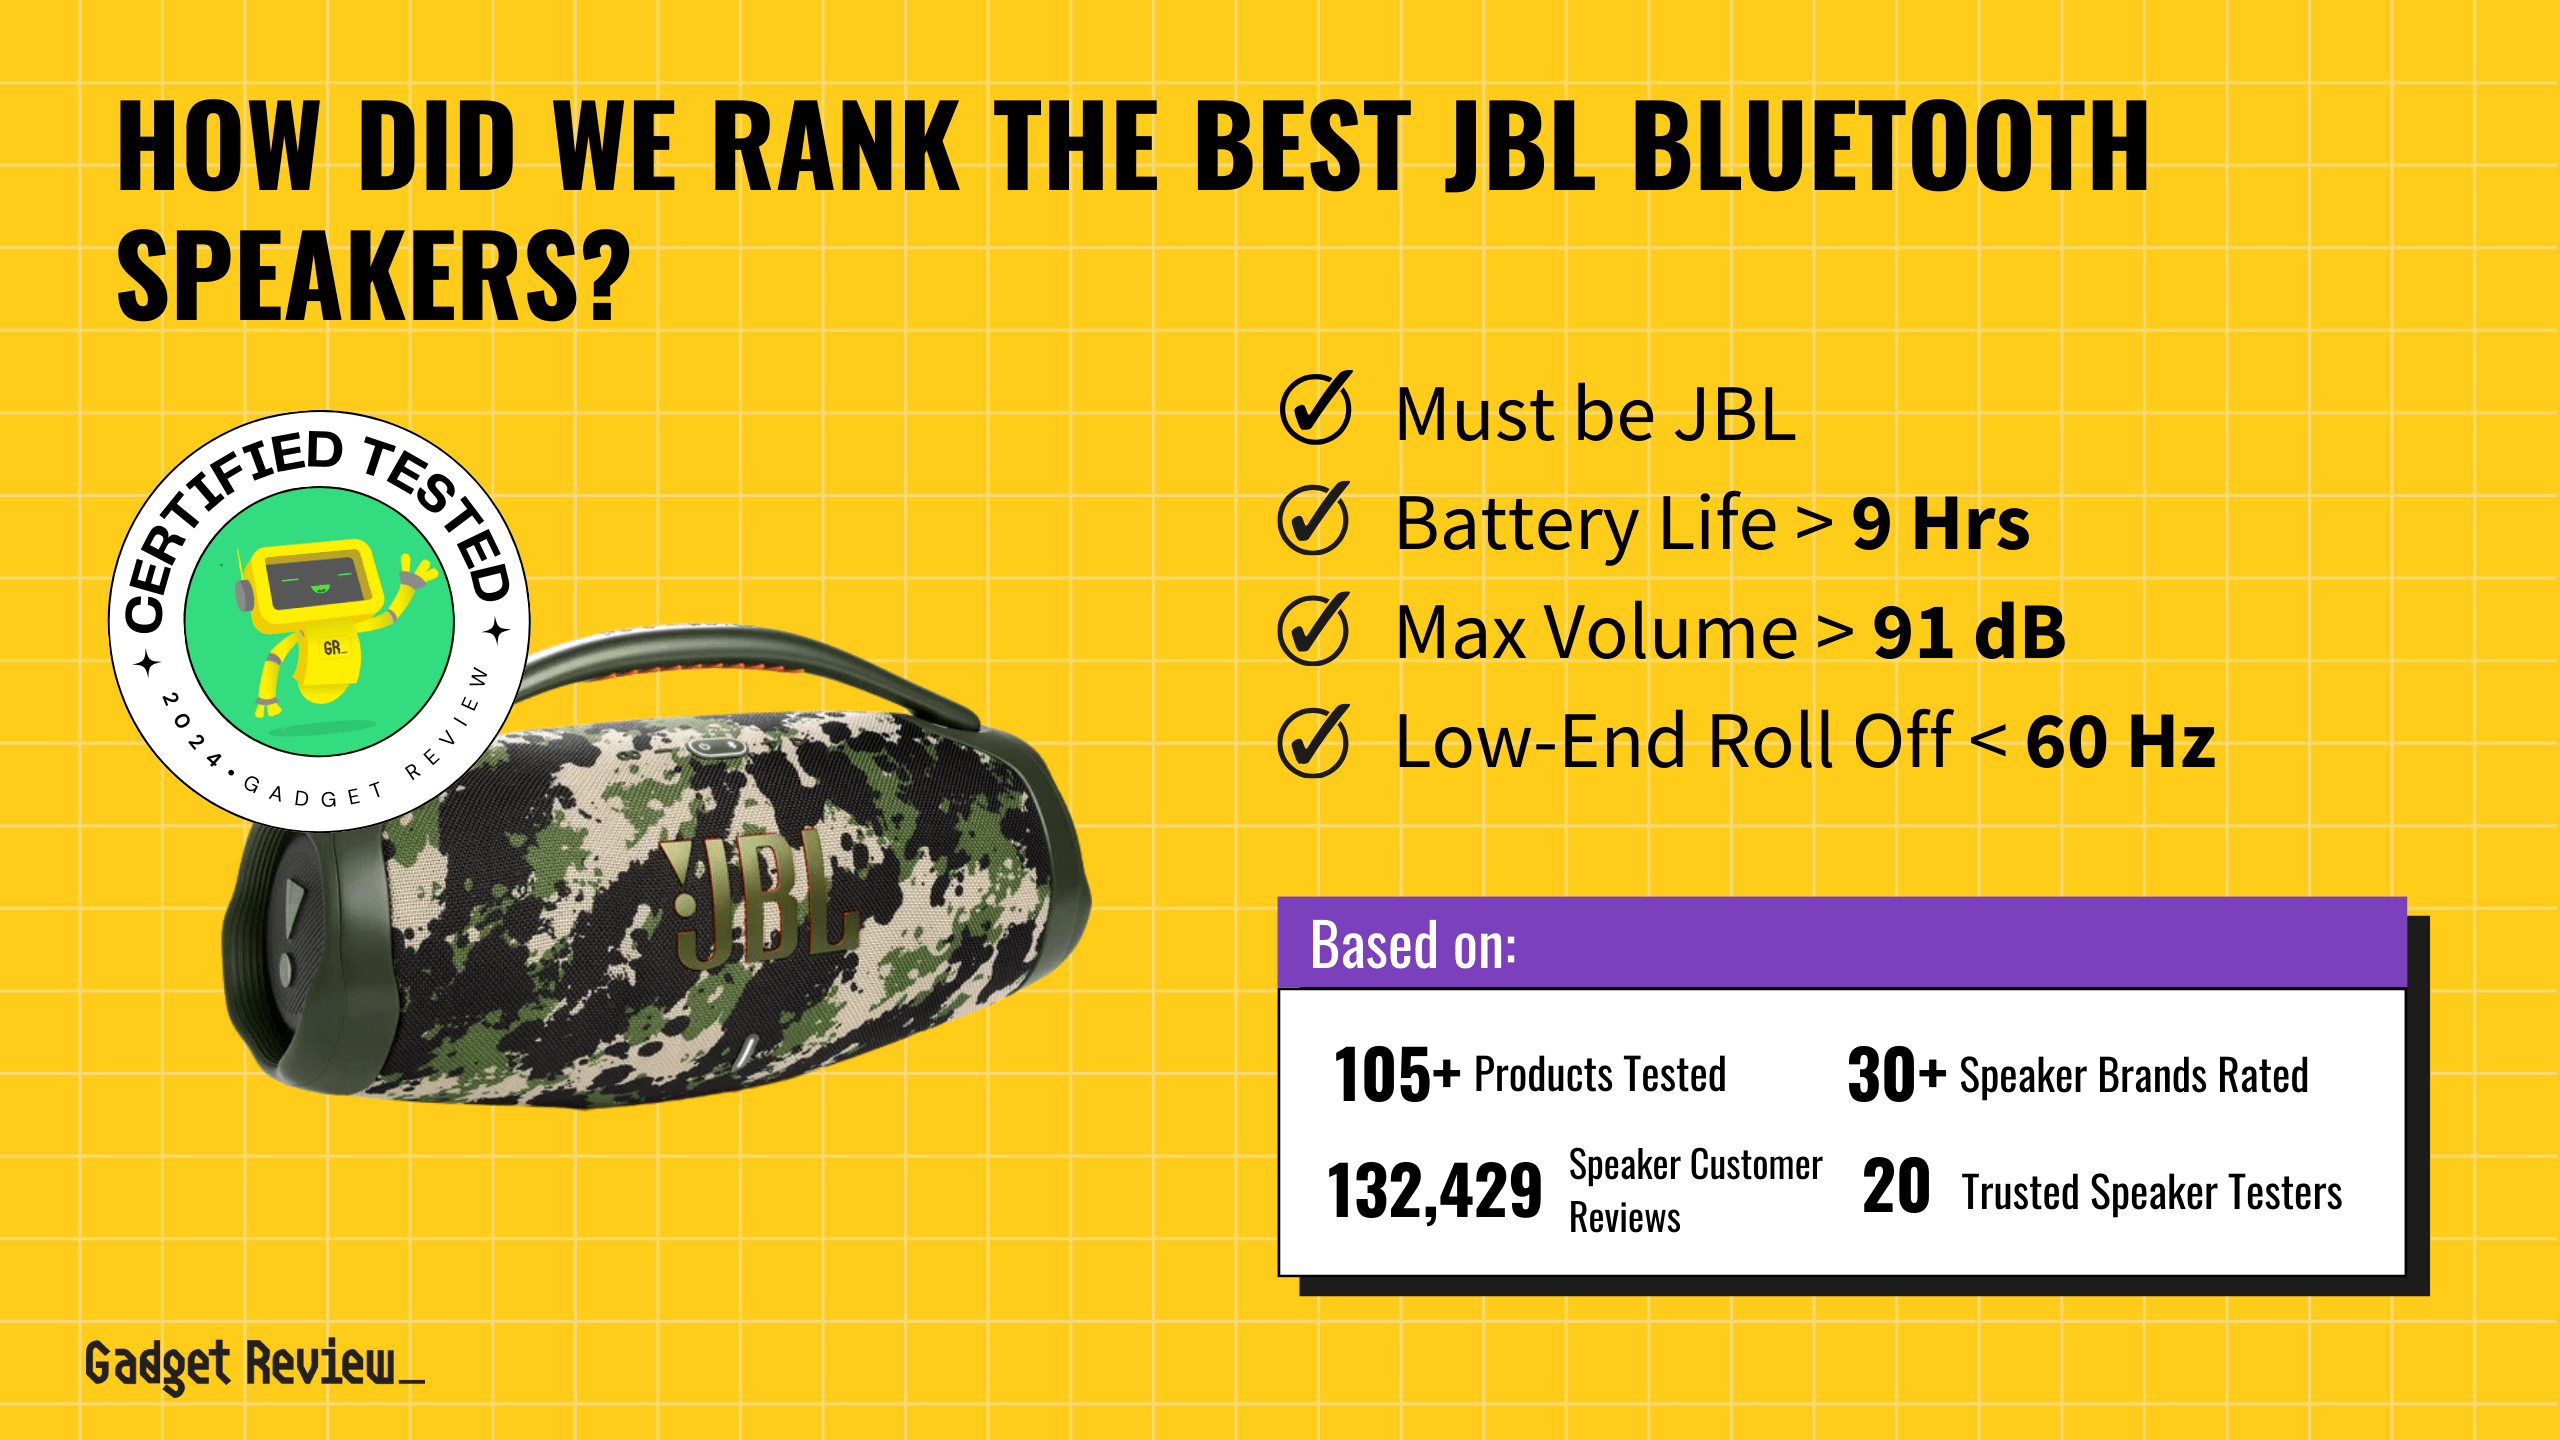 How We Ranked The 3 Best JBL Bluetooth Speakers